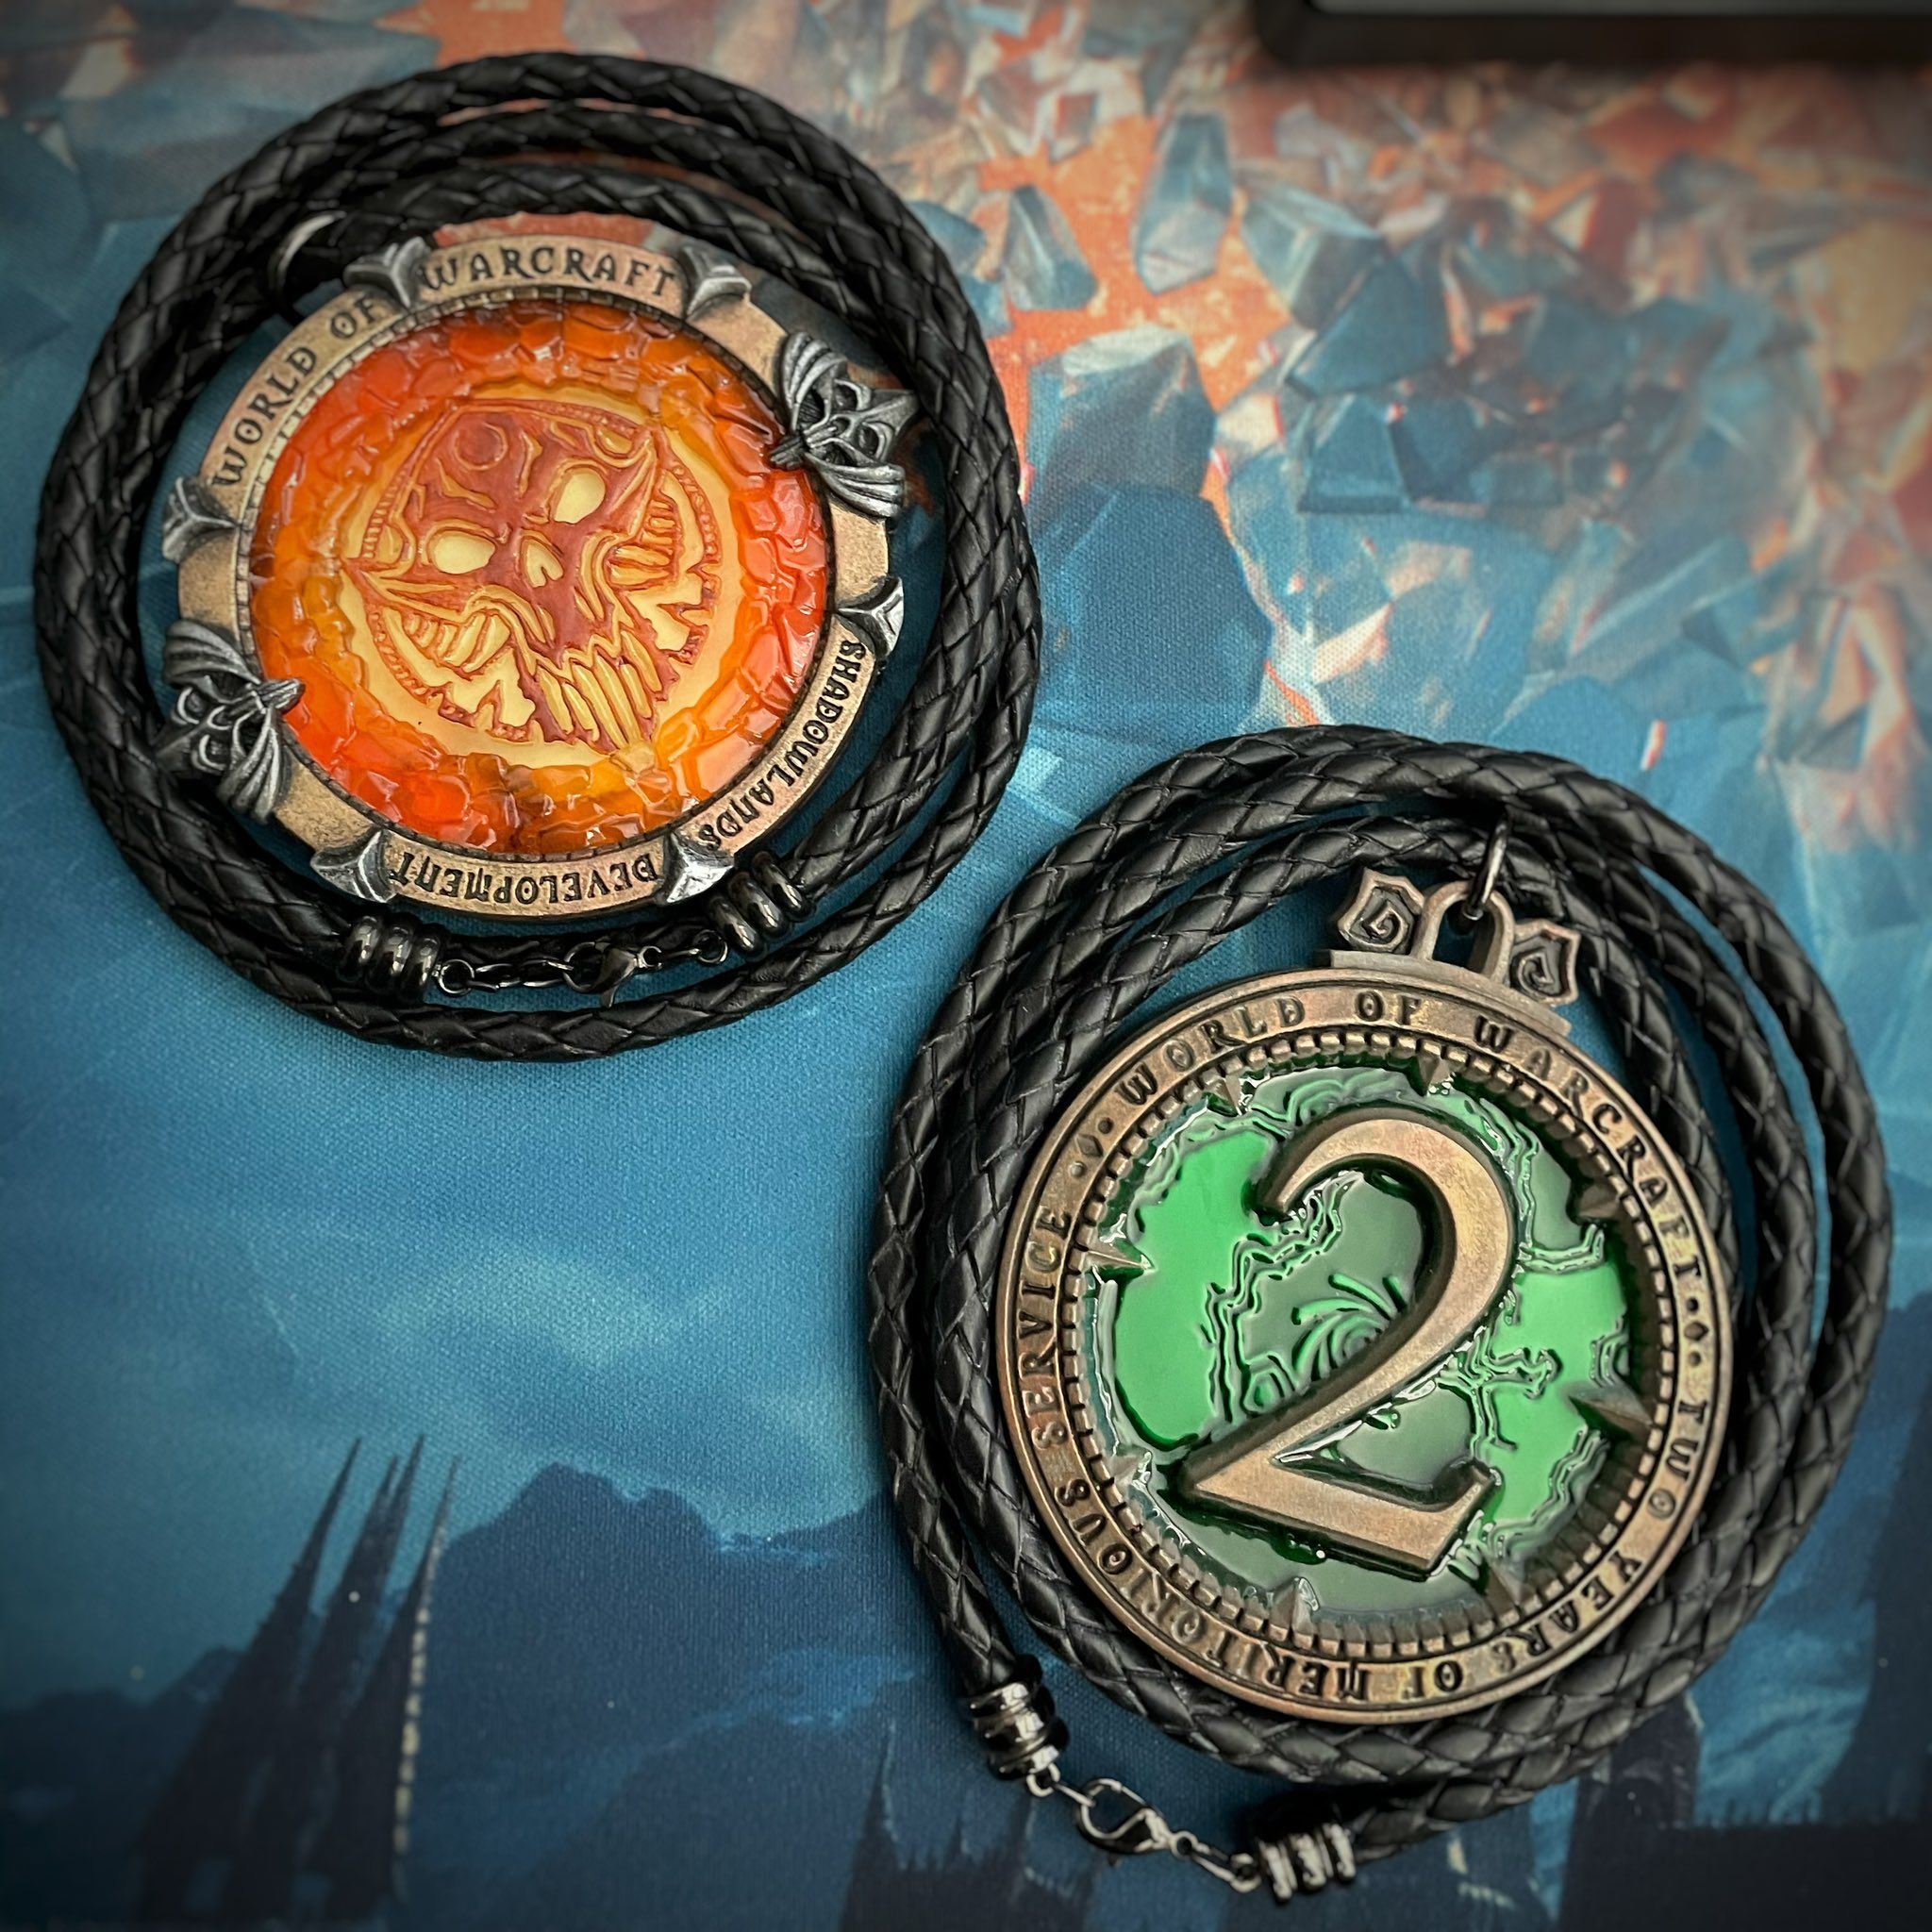 Медали представителей команды WoW в Blizzard Entertainment. Источник: твиттер